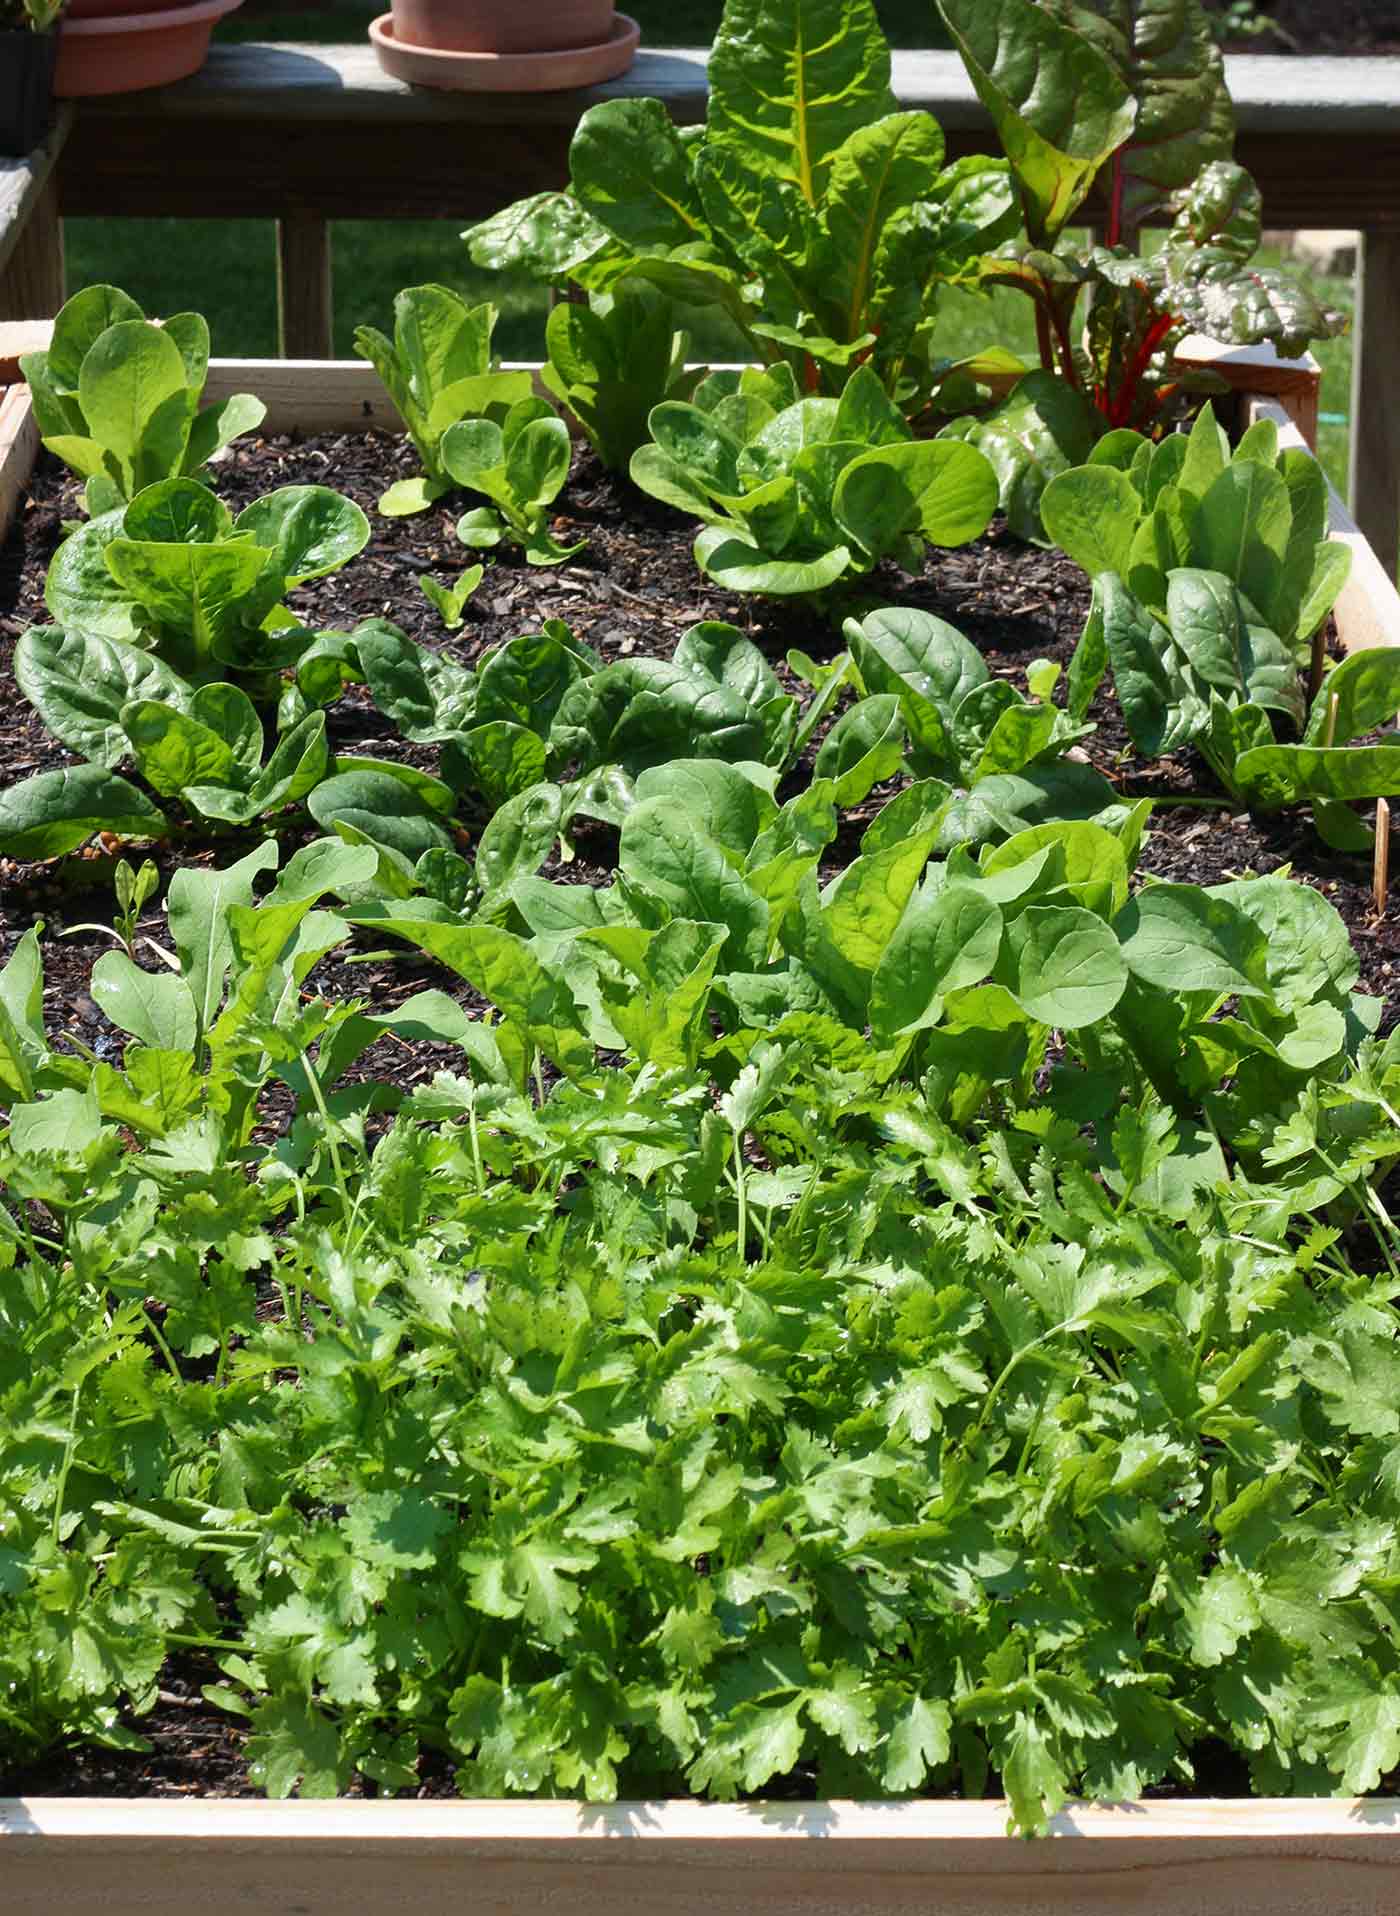 Cilantro growing in garden bench.